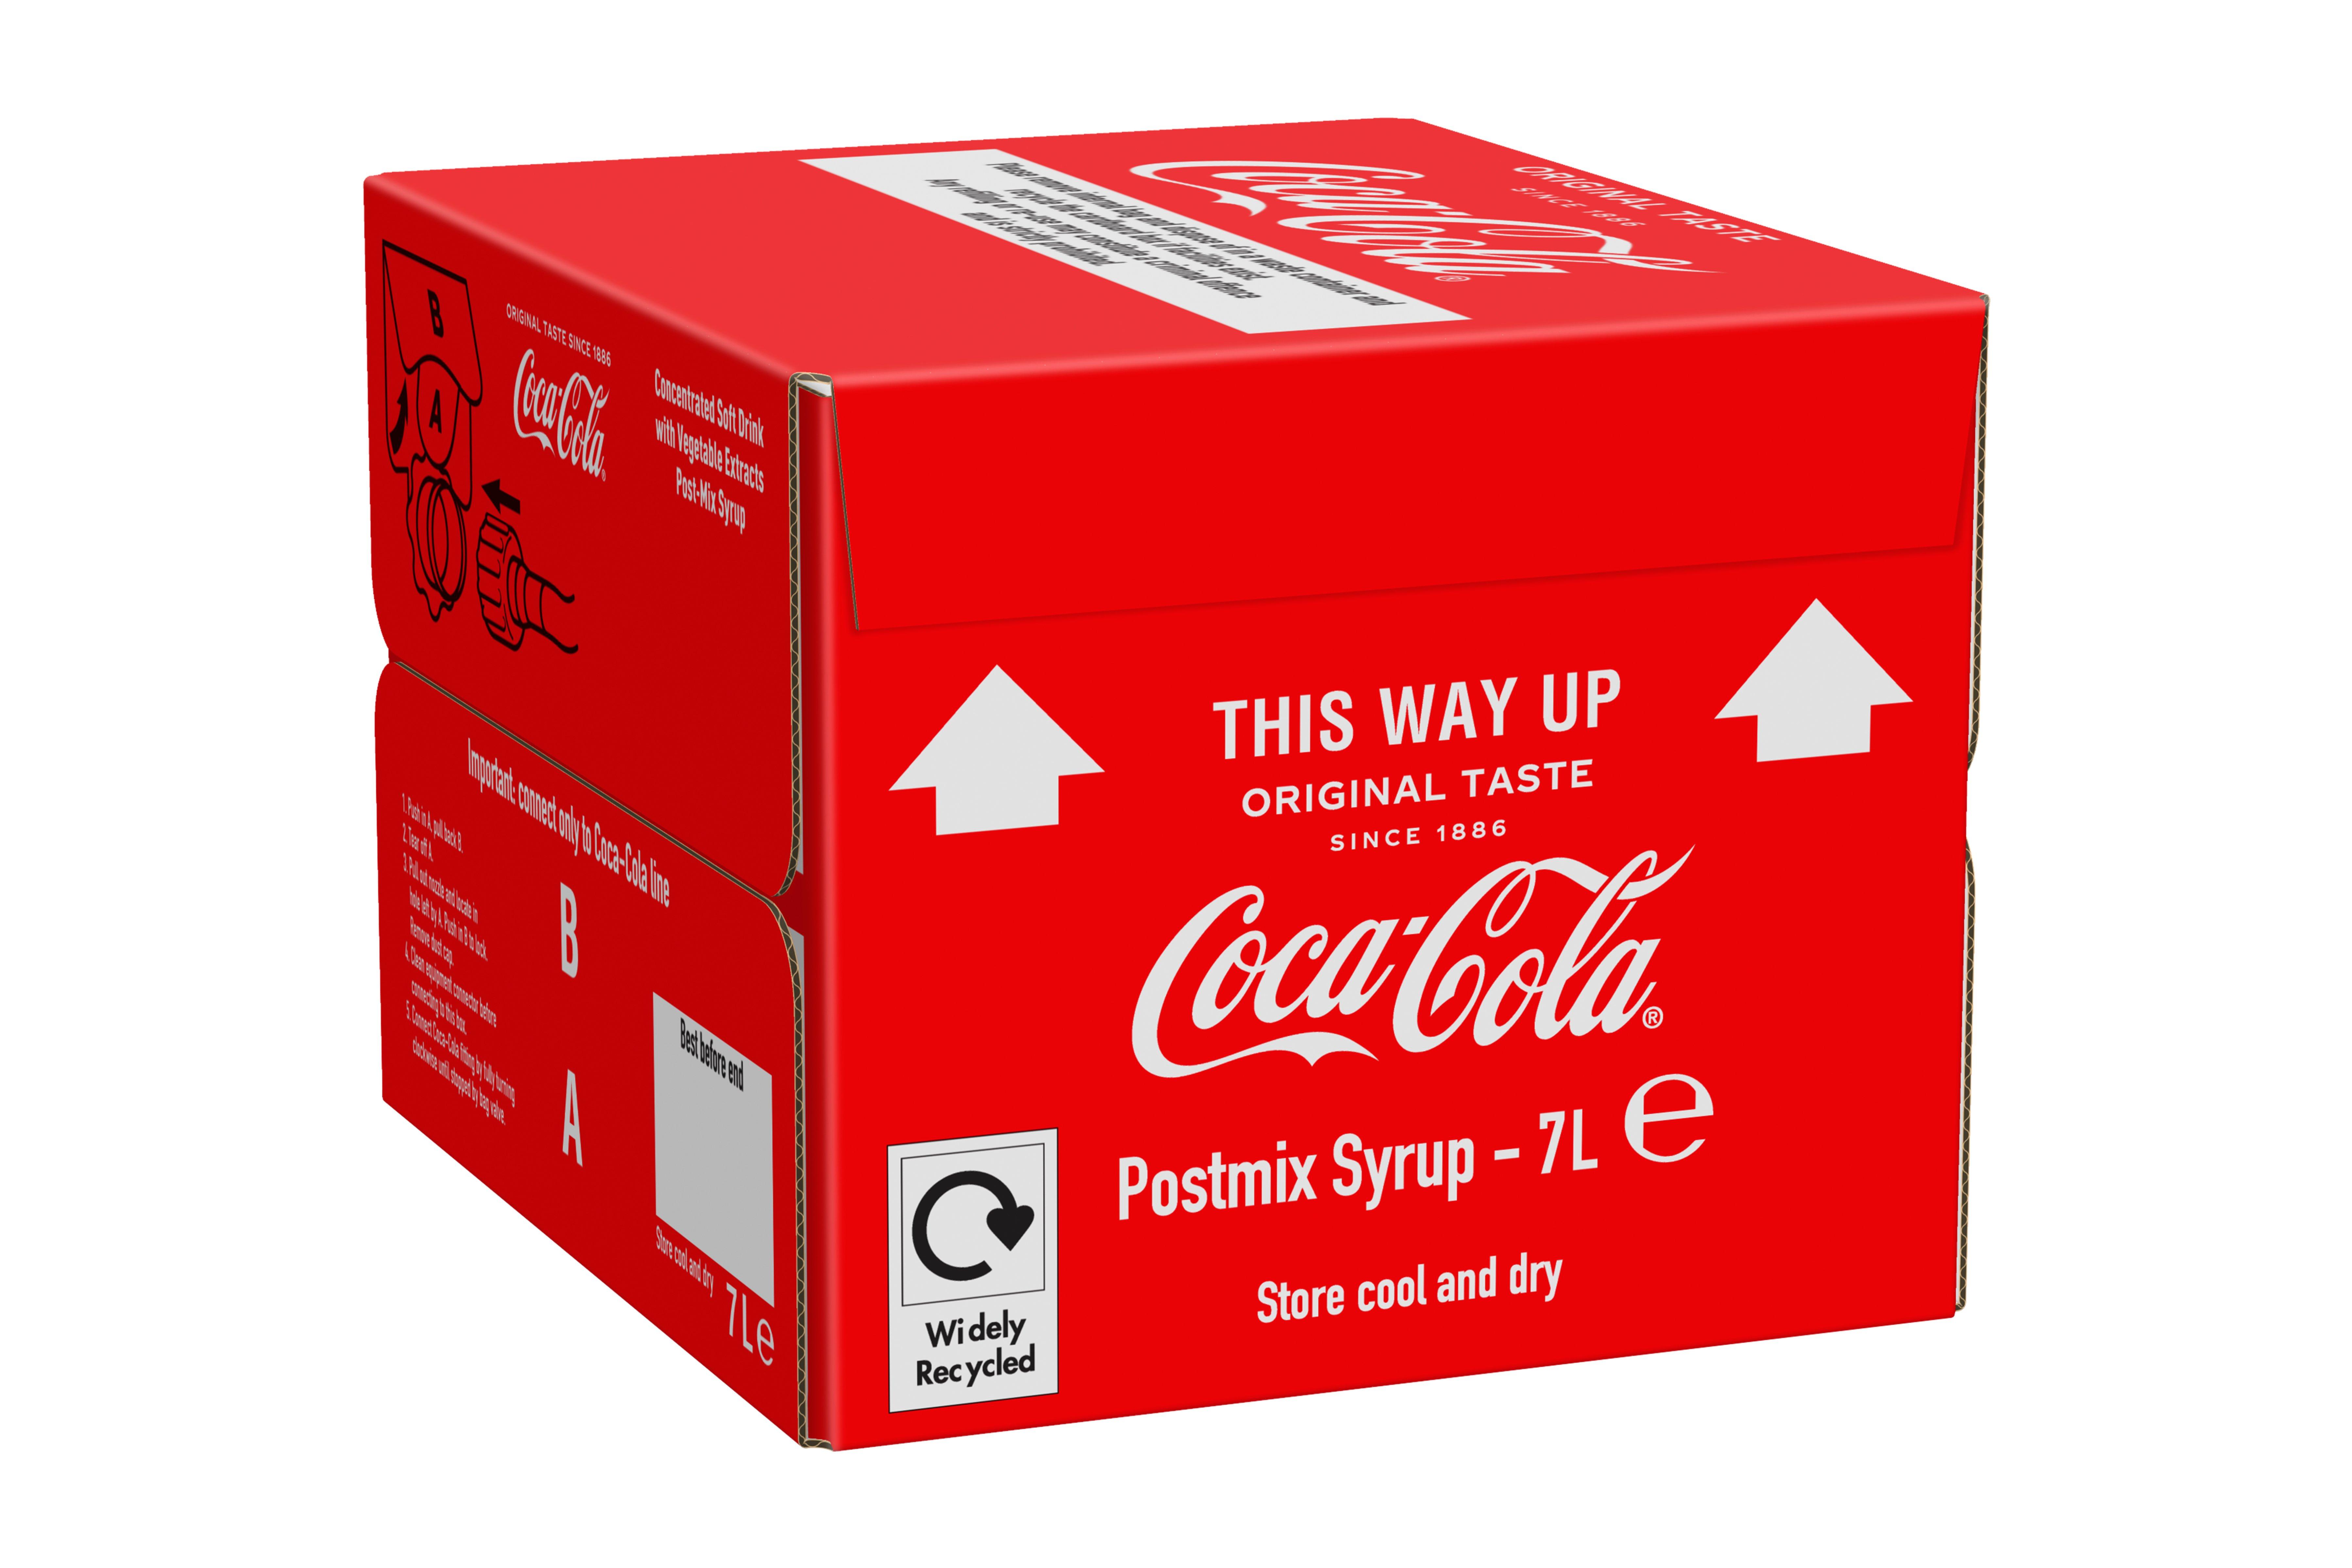 Coca-Cola Postmix Syrup 7L Wholesale – Buy Coca-Cola Postmix Syrup